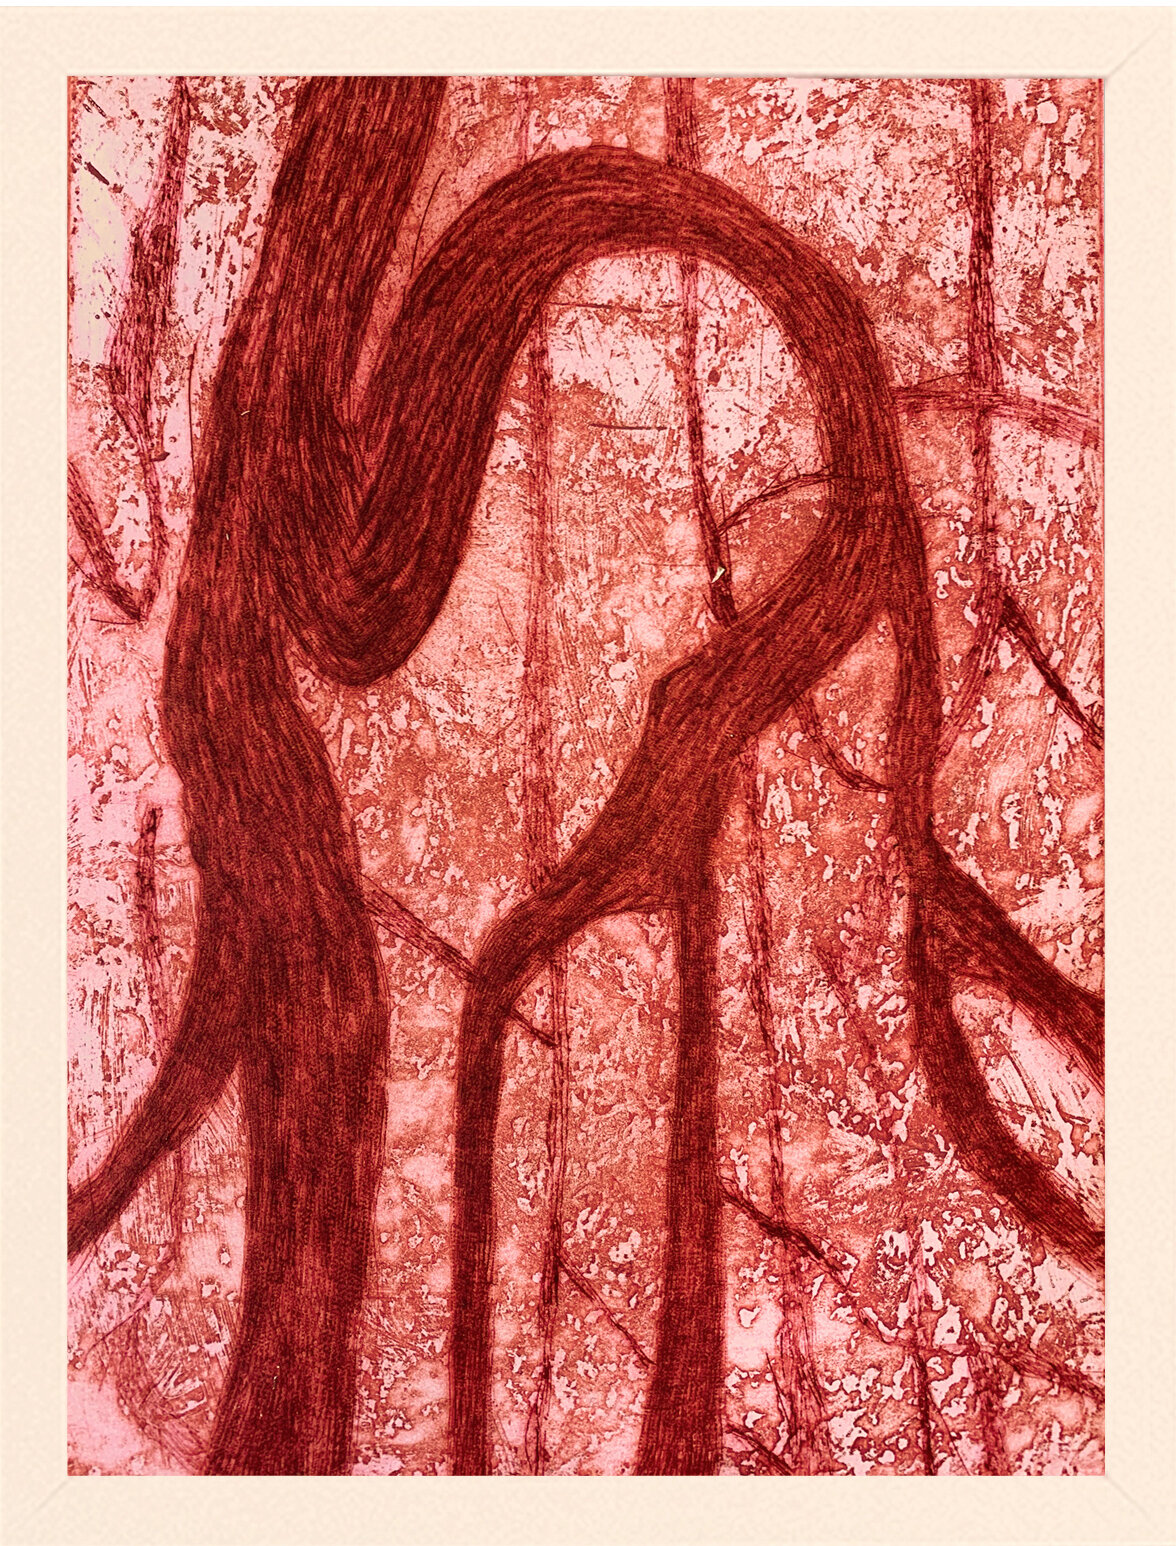 Forked Branch (Pink Nightfall), 2019